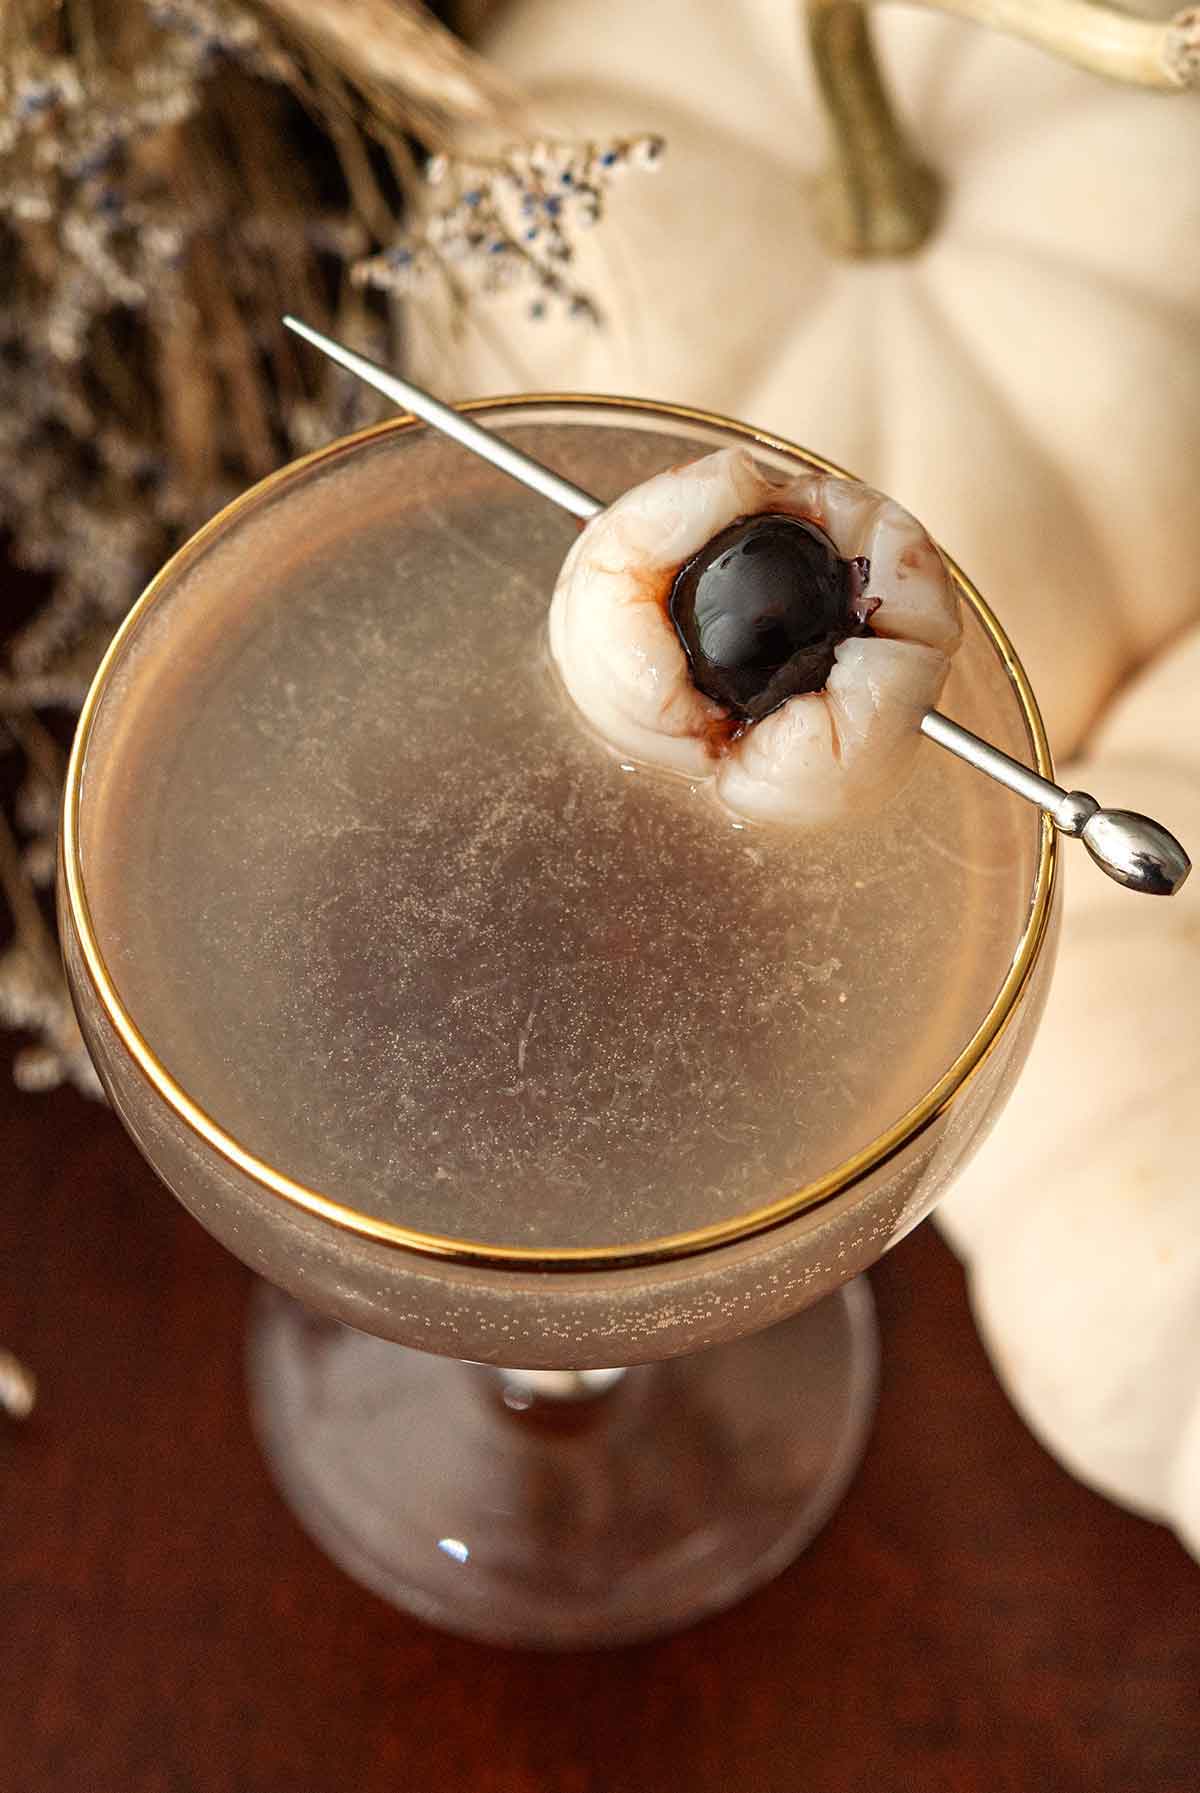 A lychee "eyeball" garnish on a cocktail.